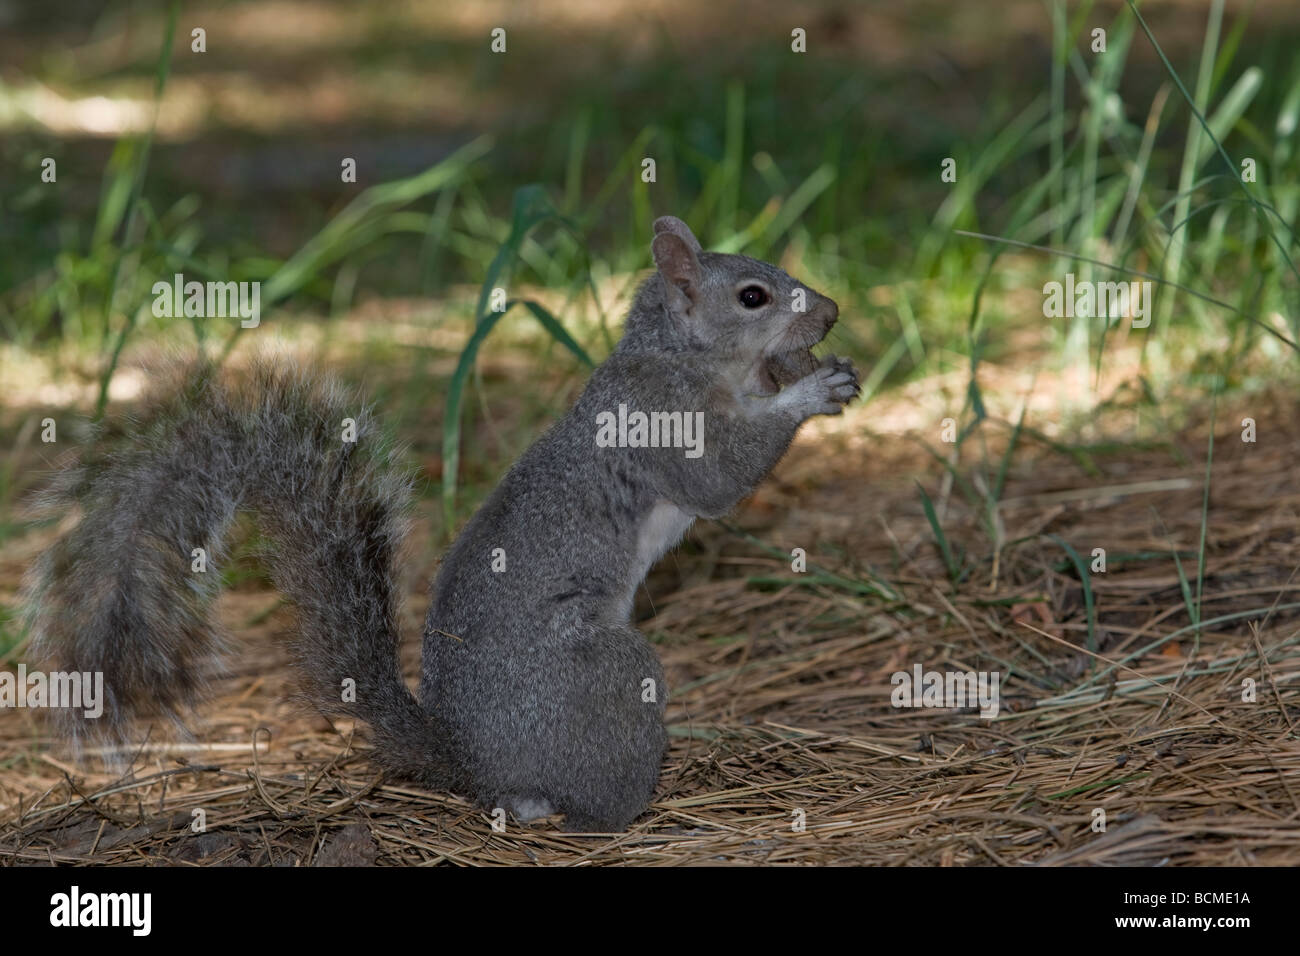 The California Ground Squirrel (Spermophilus beecheyi) eating an acorn. Stock Photo